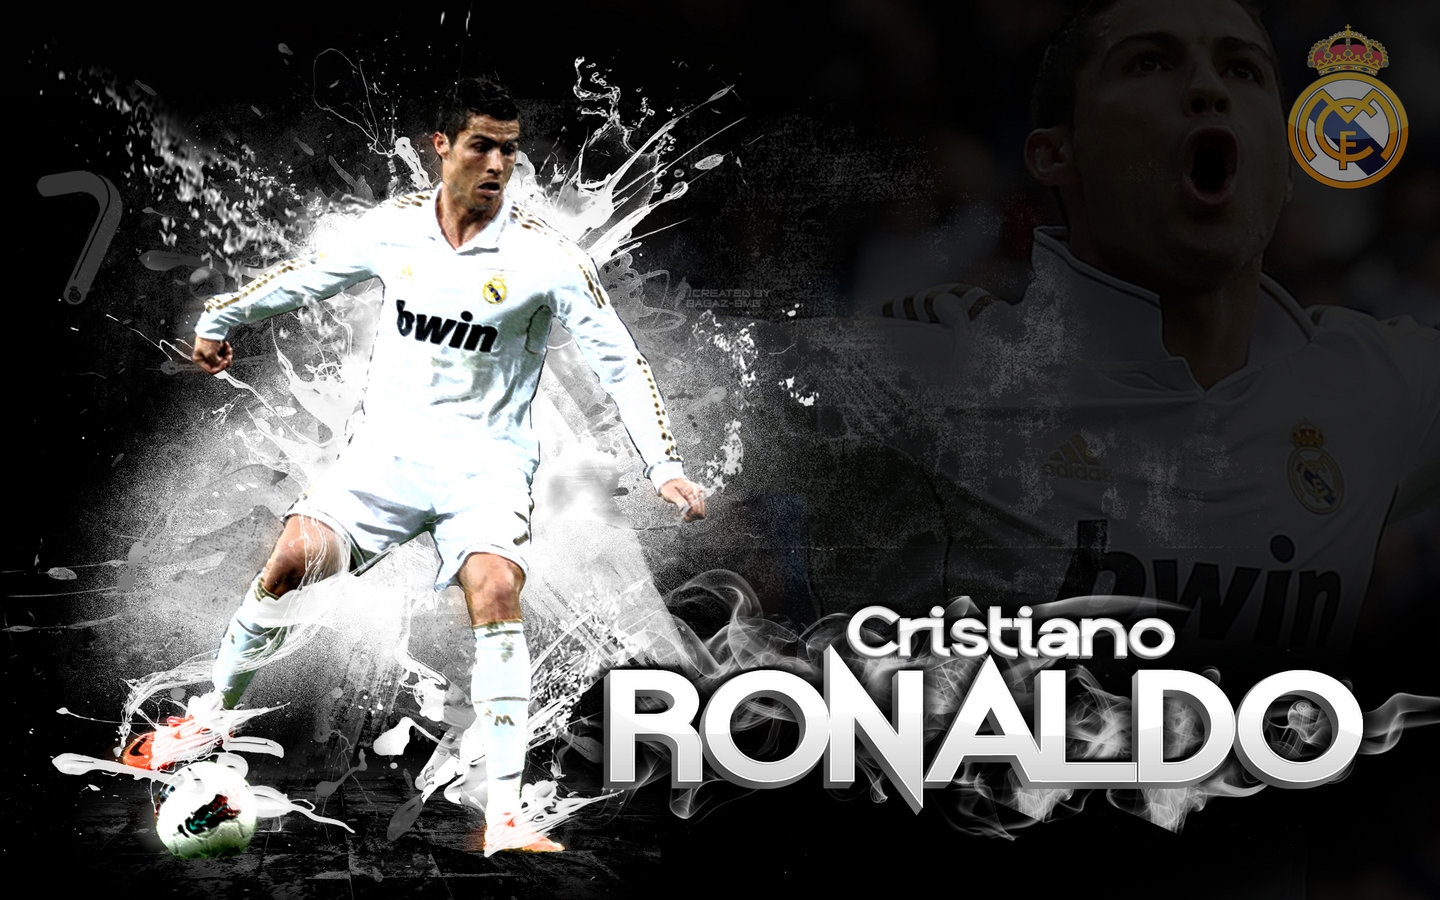 Marvelous Cristiano Ronaldo Wallpaper Photo Portrays